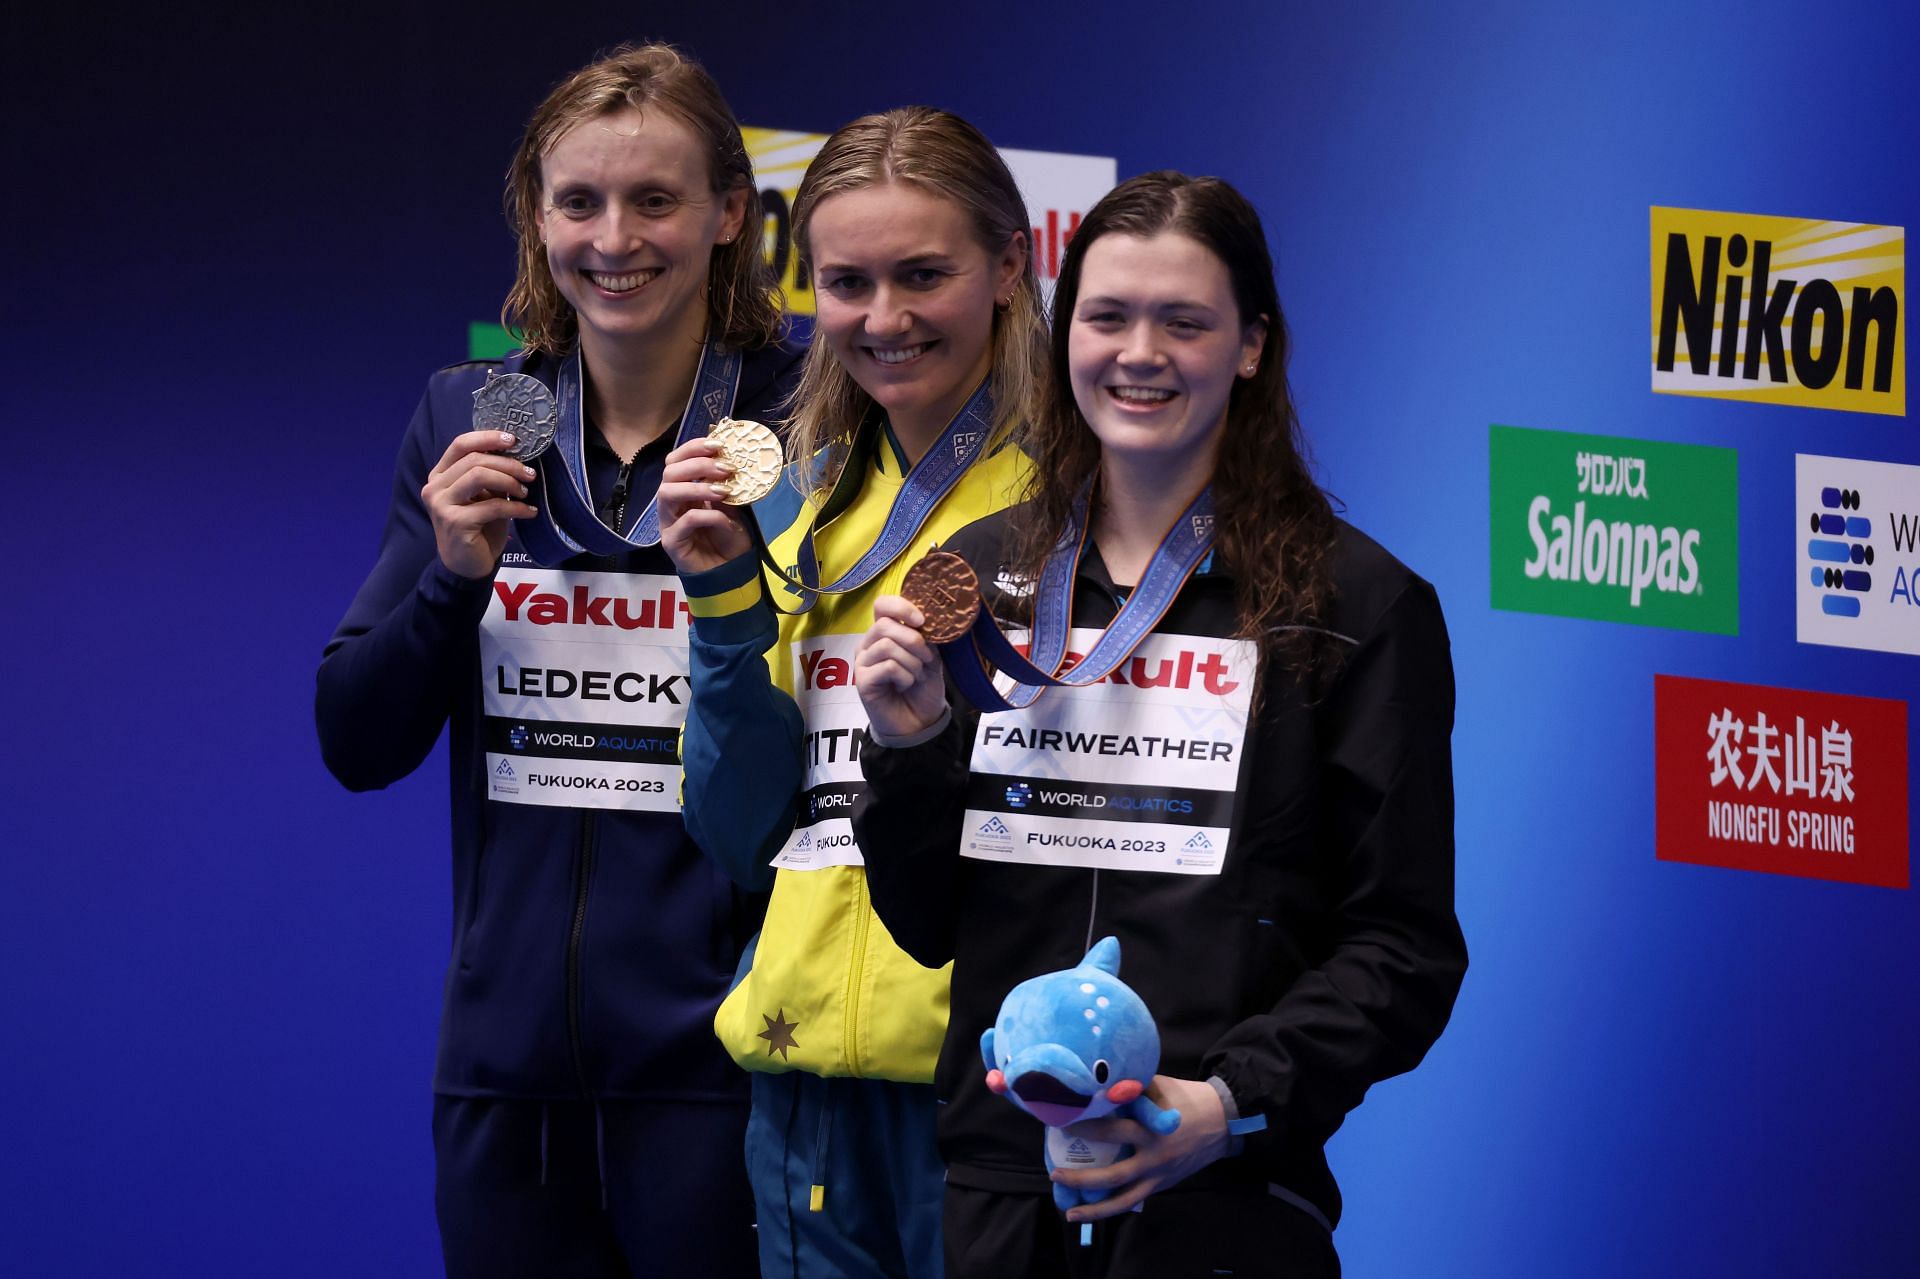 Silver medallist Katie Ledecky, gold medallist Ariarne Titmus, and bronze medallist Erika Fairweather at Fukuoka 2023 World Aquatics Championships